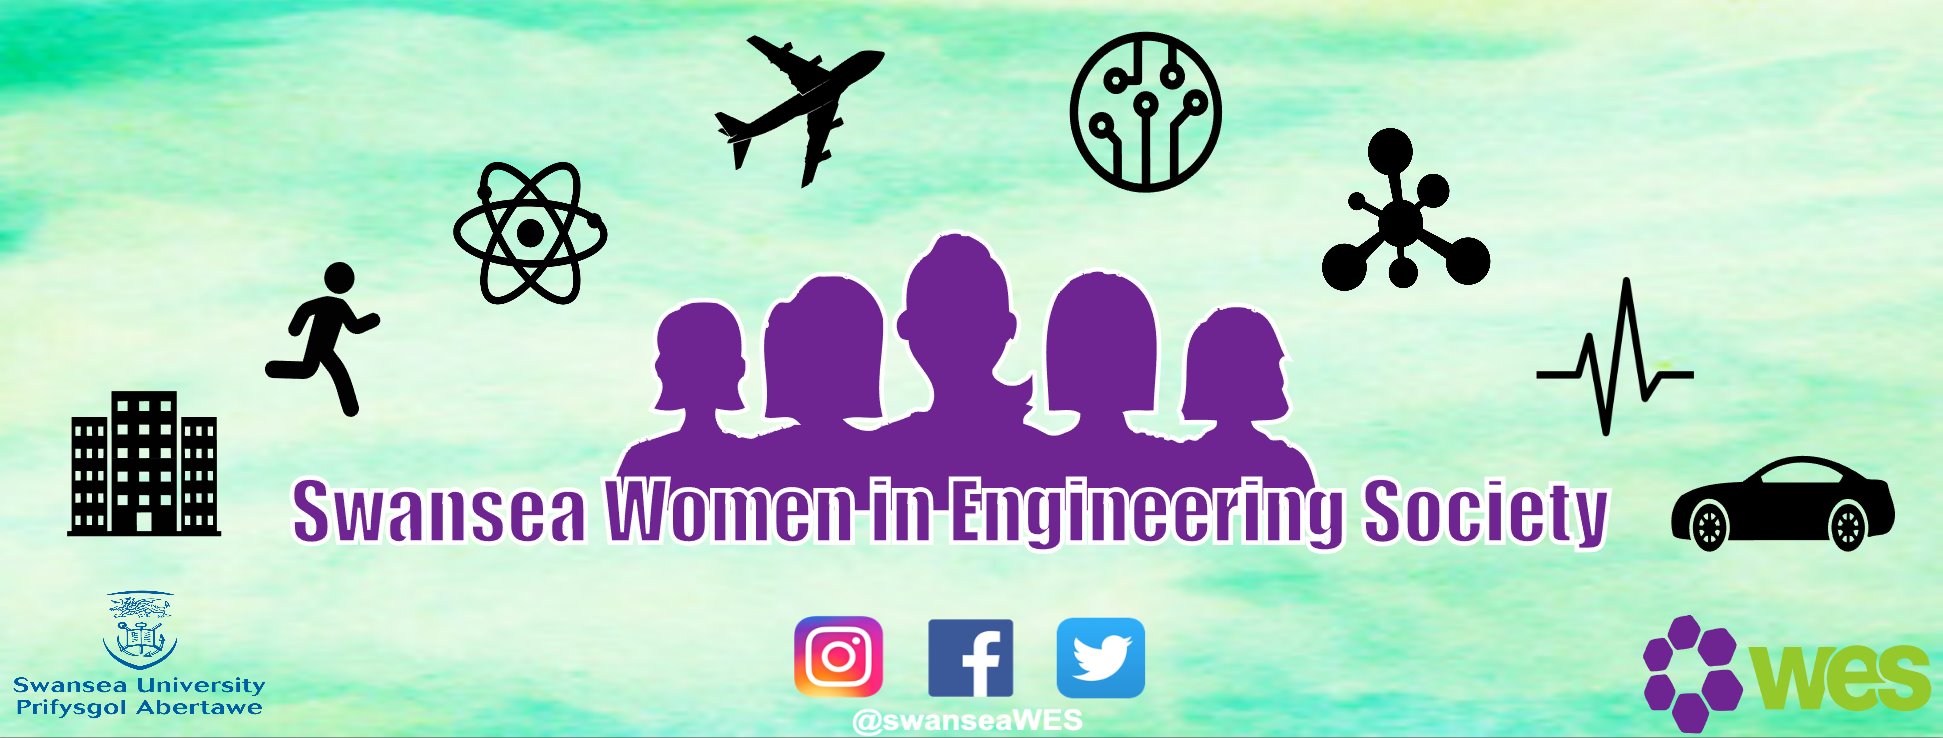 Banner for Women in Engineering